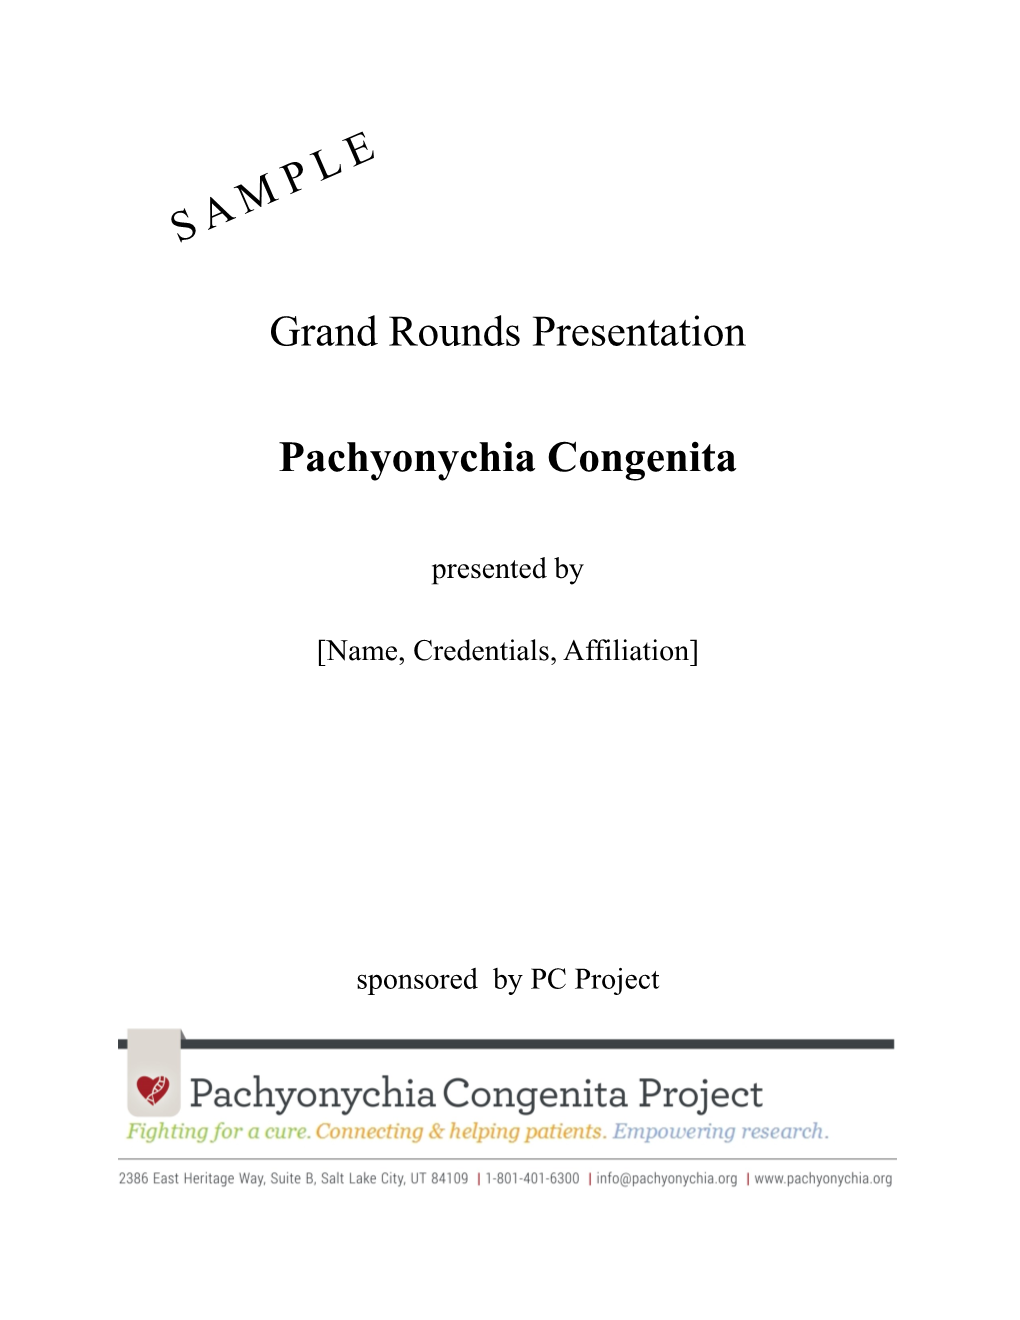 S a M P L E Grand Rounds Presentation Pachyonychia